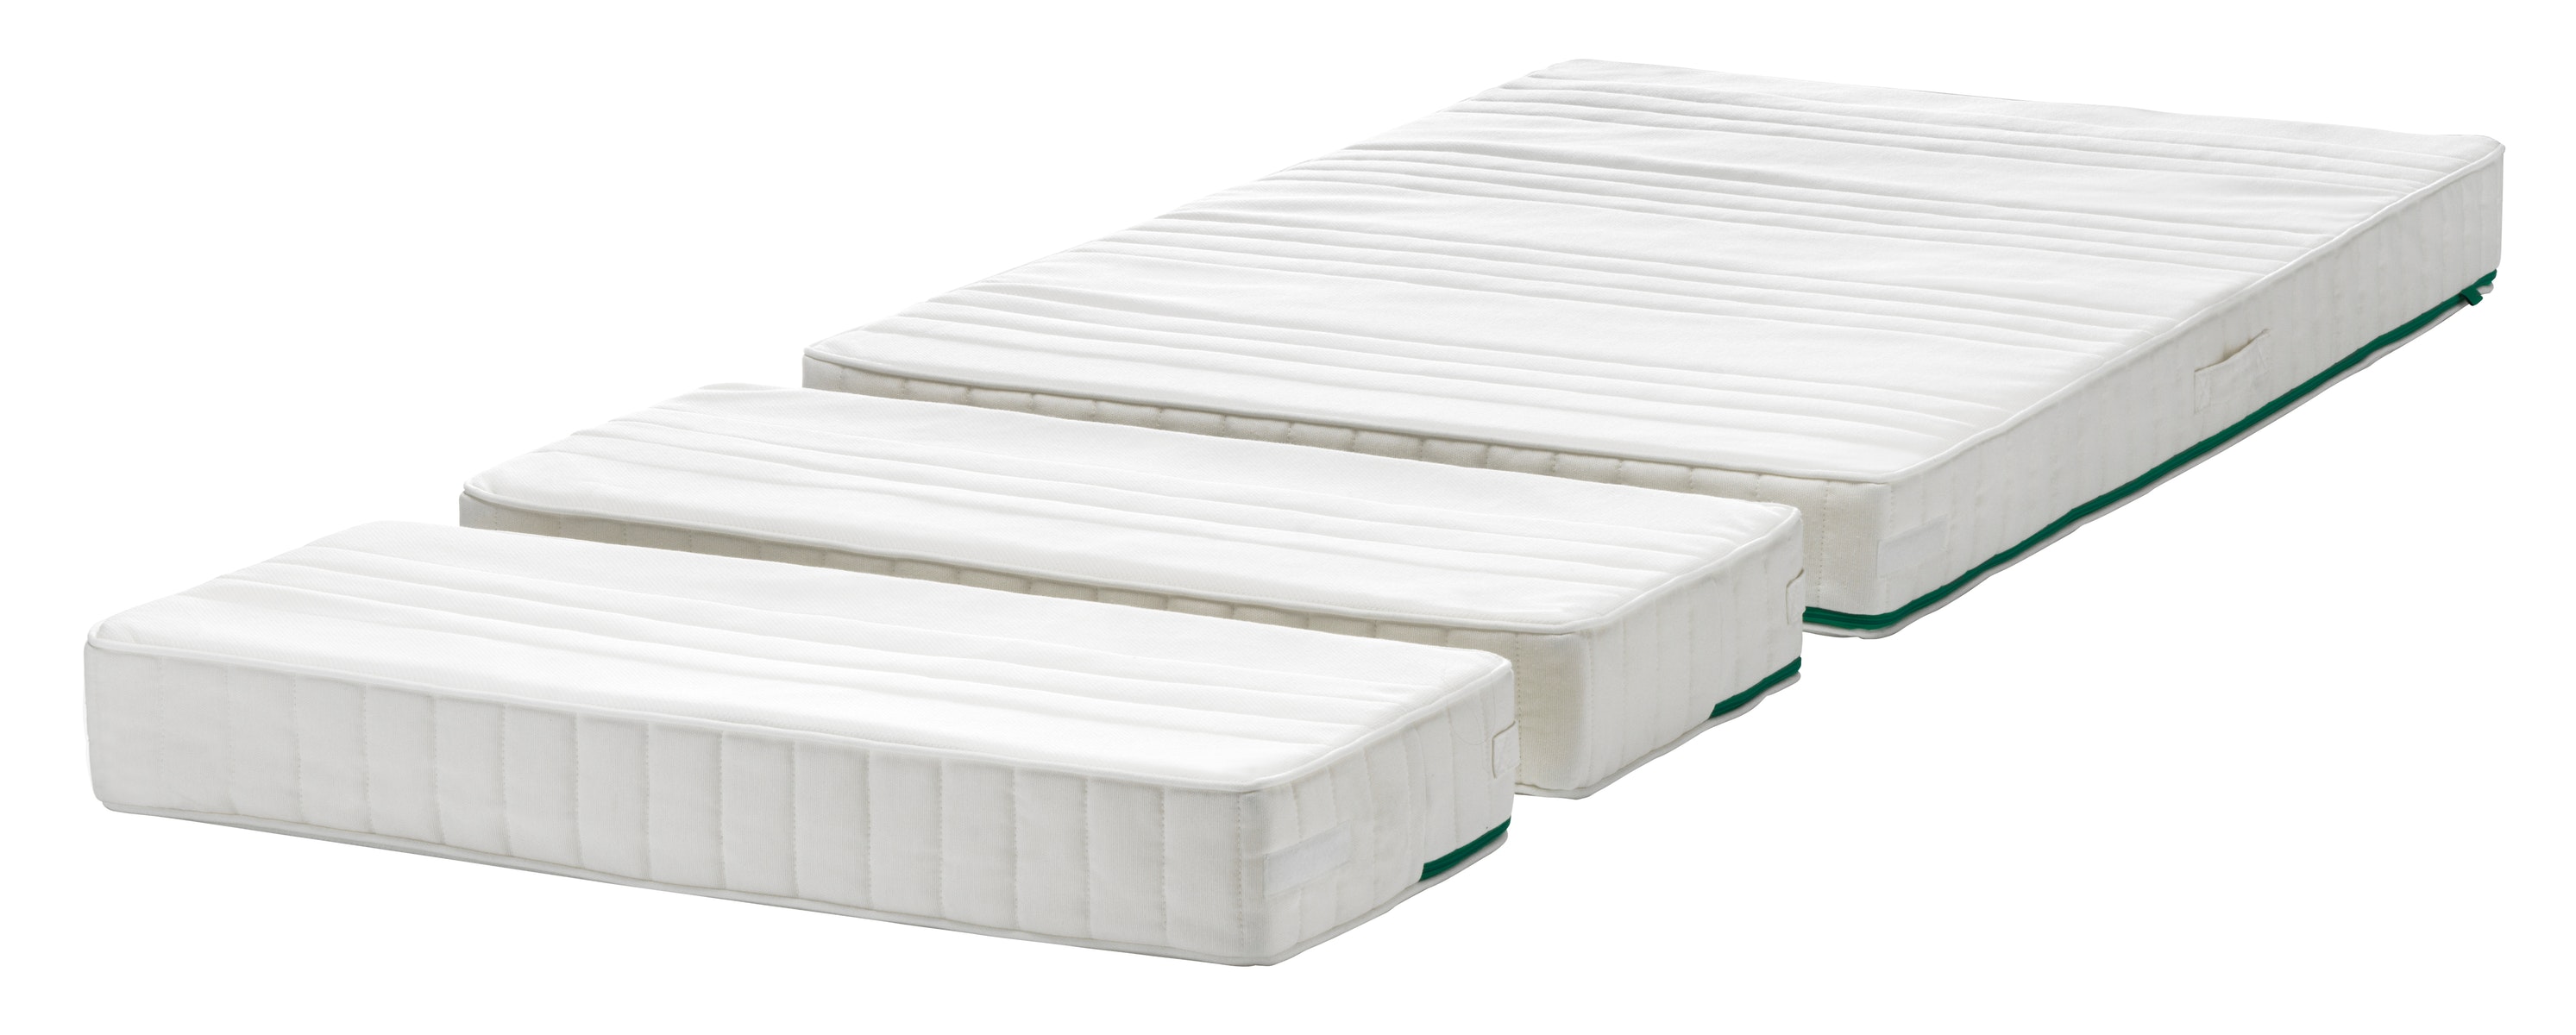 sundvik mattress